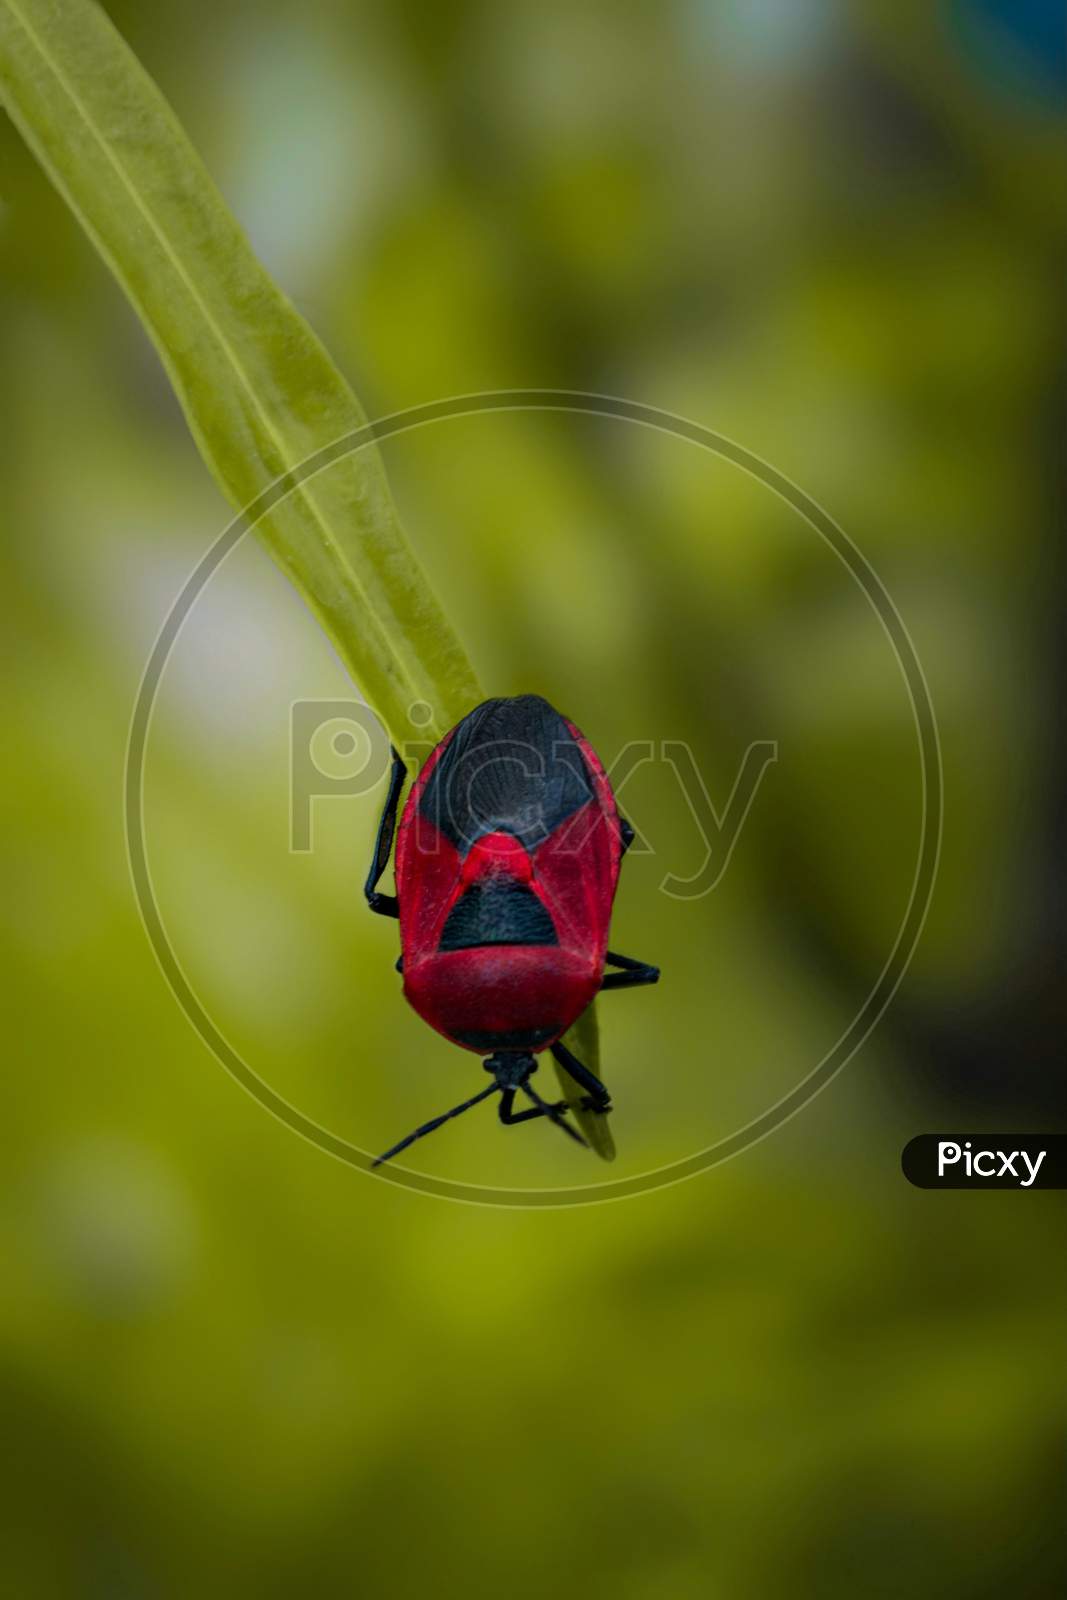 Red jewel bug on a leaf.